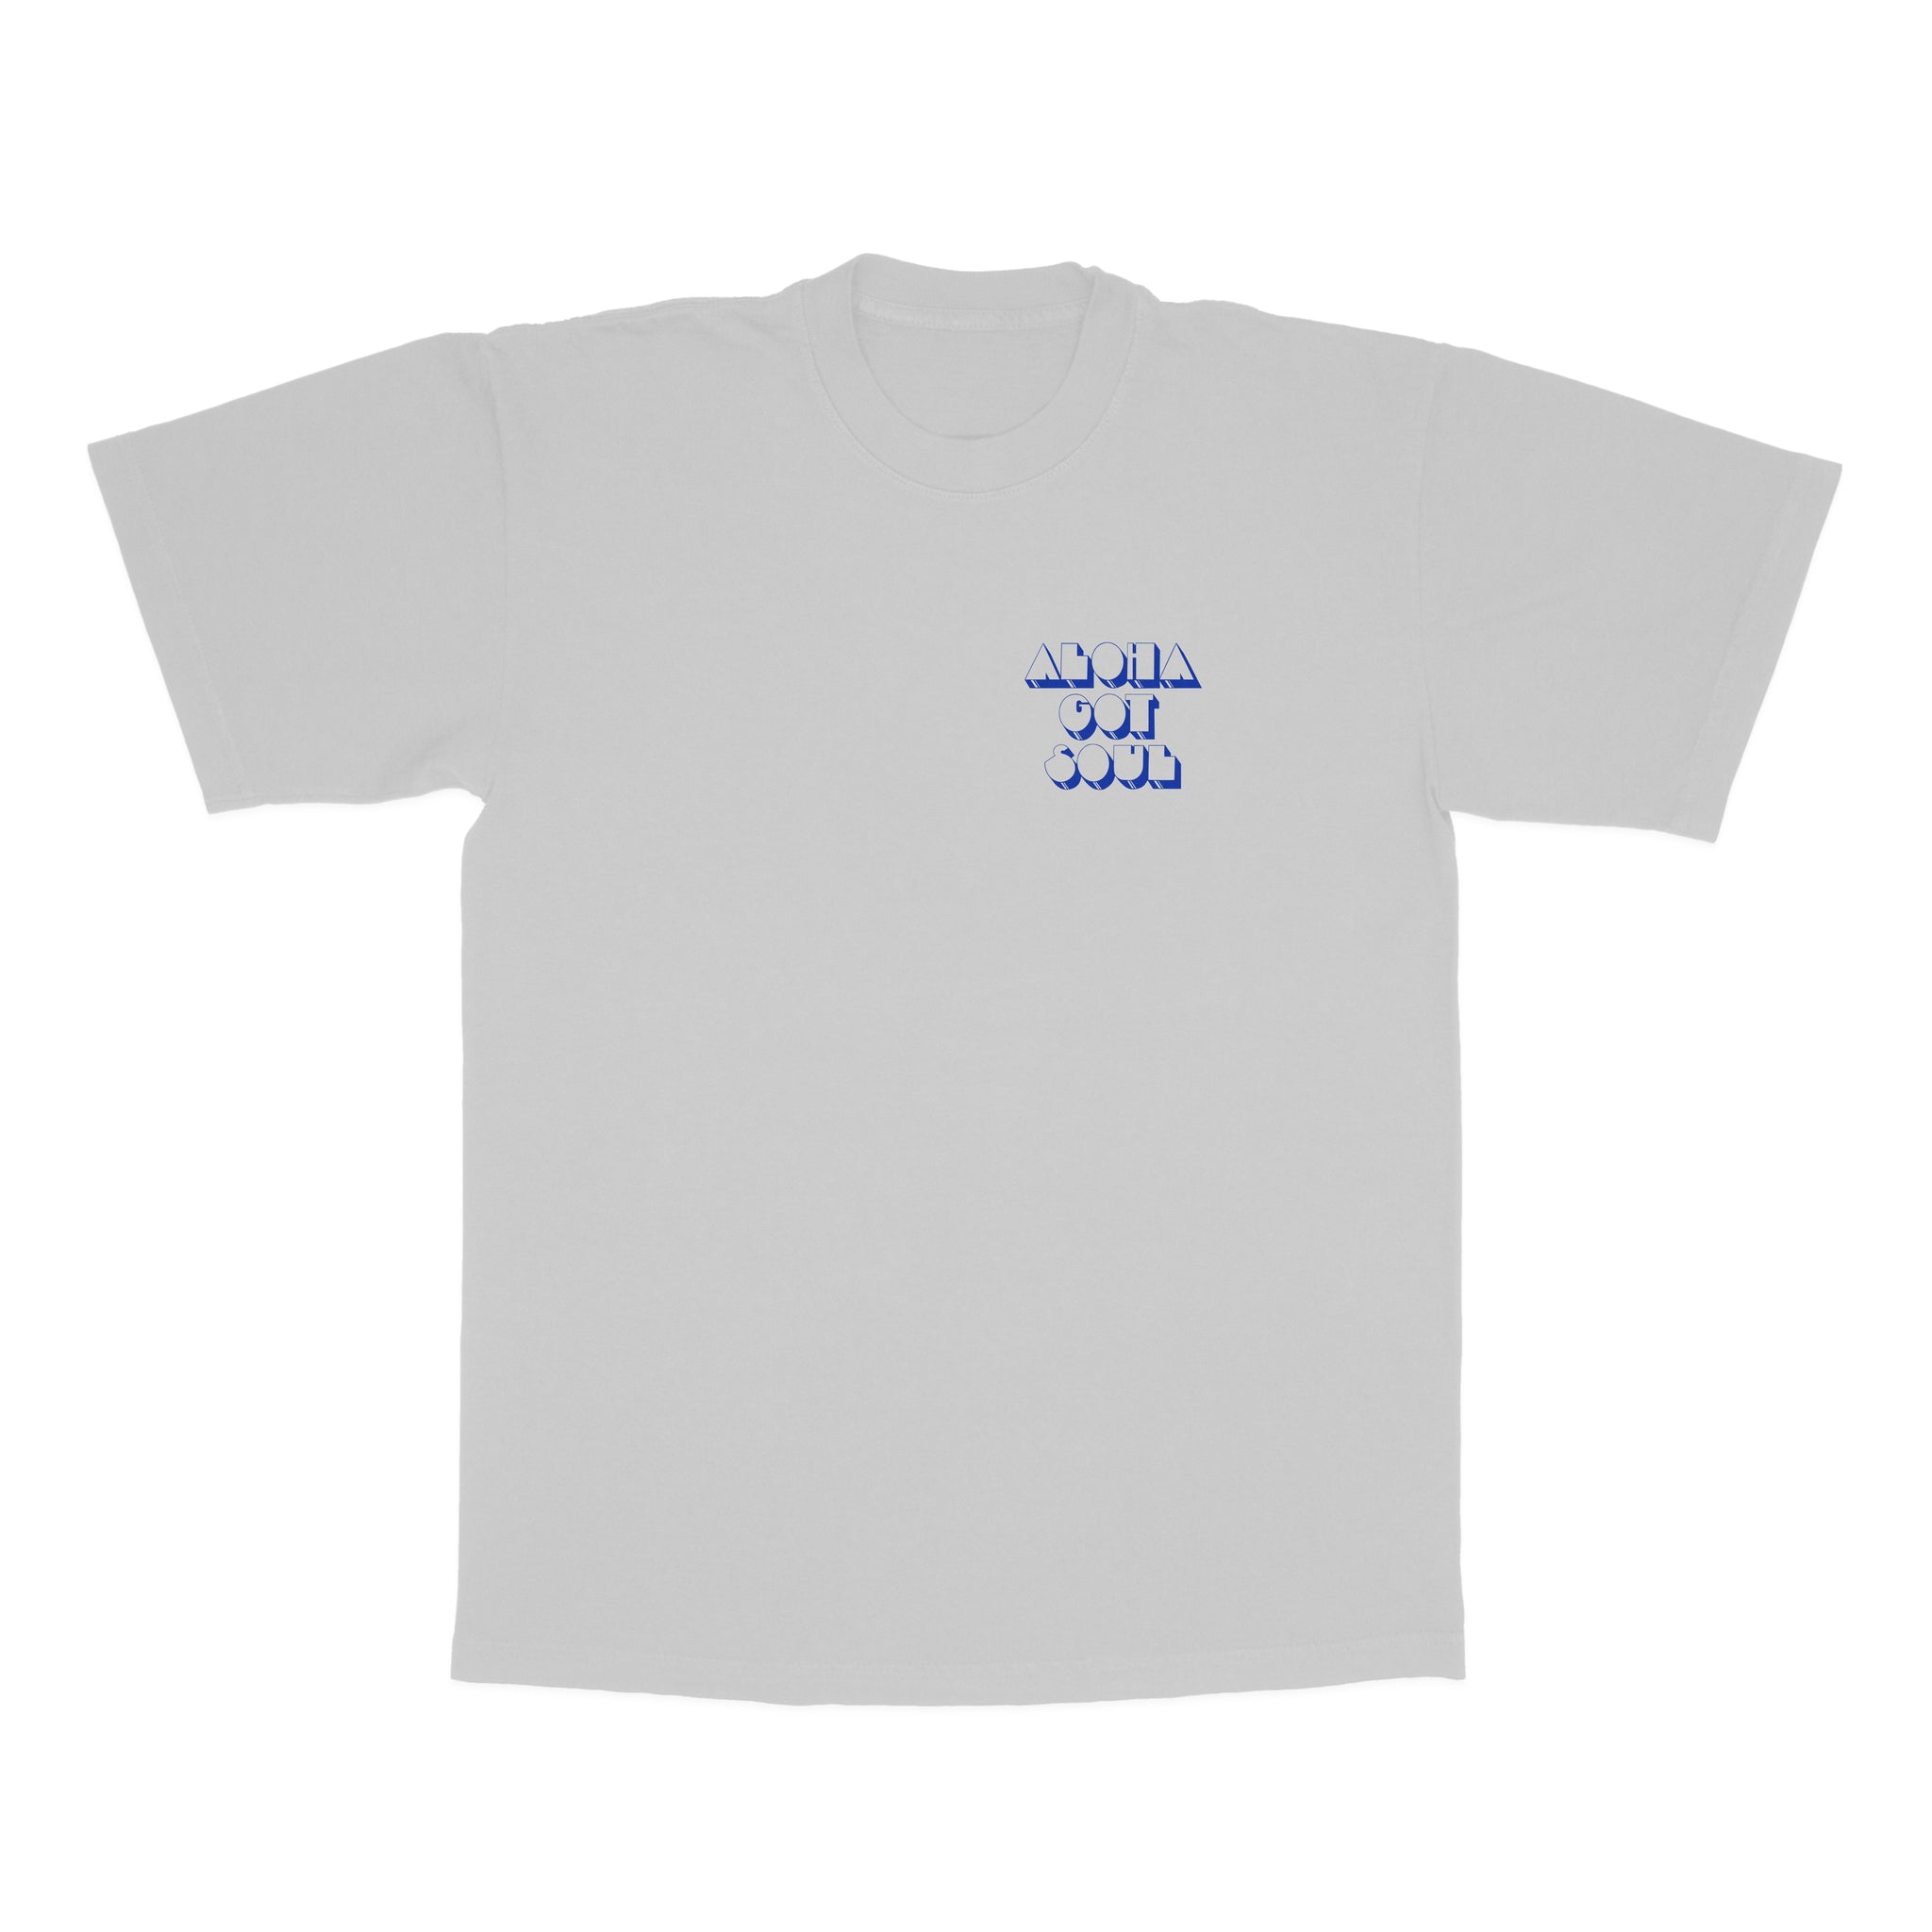 Disco Island T-shirt (Gray / Blue)